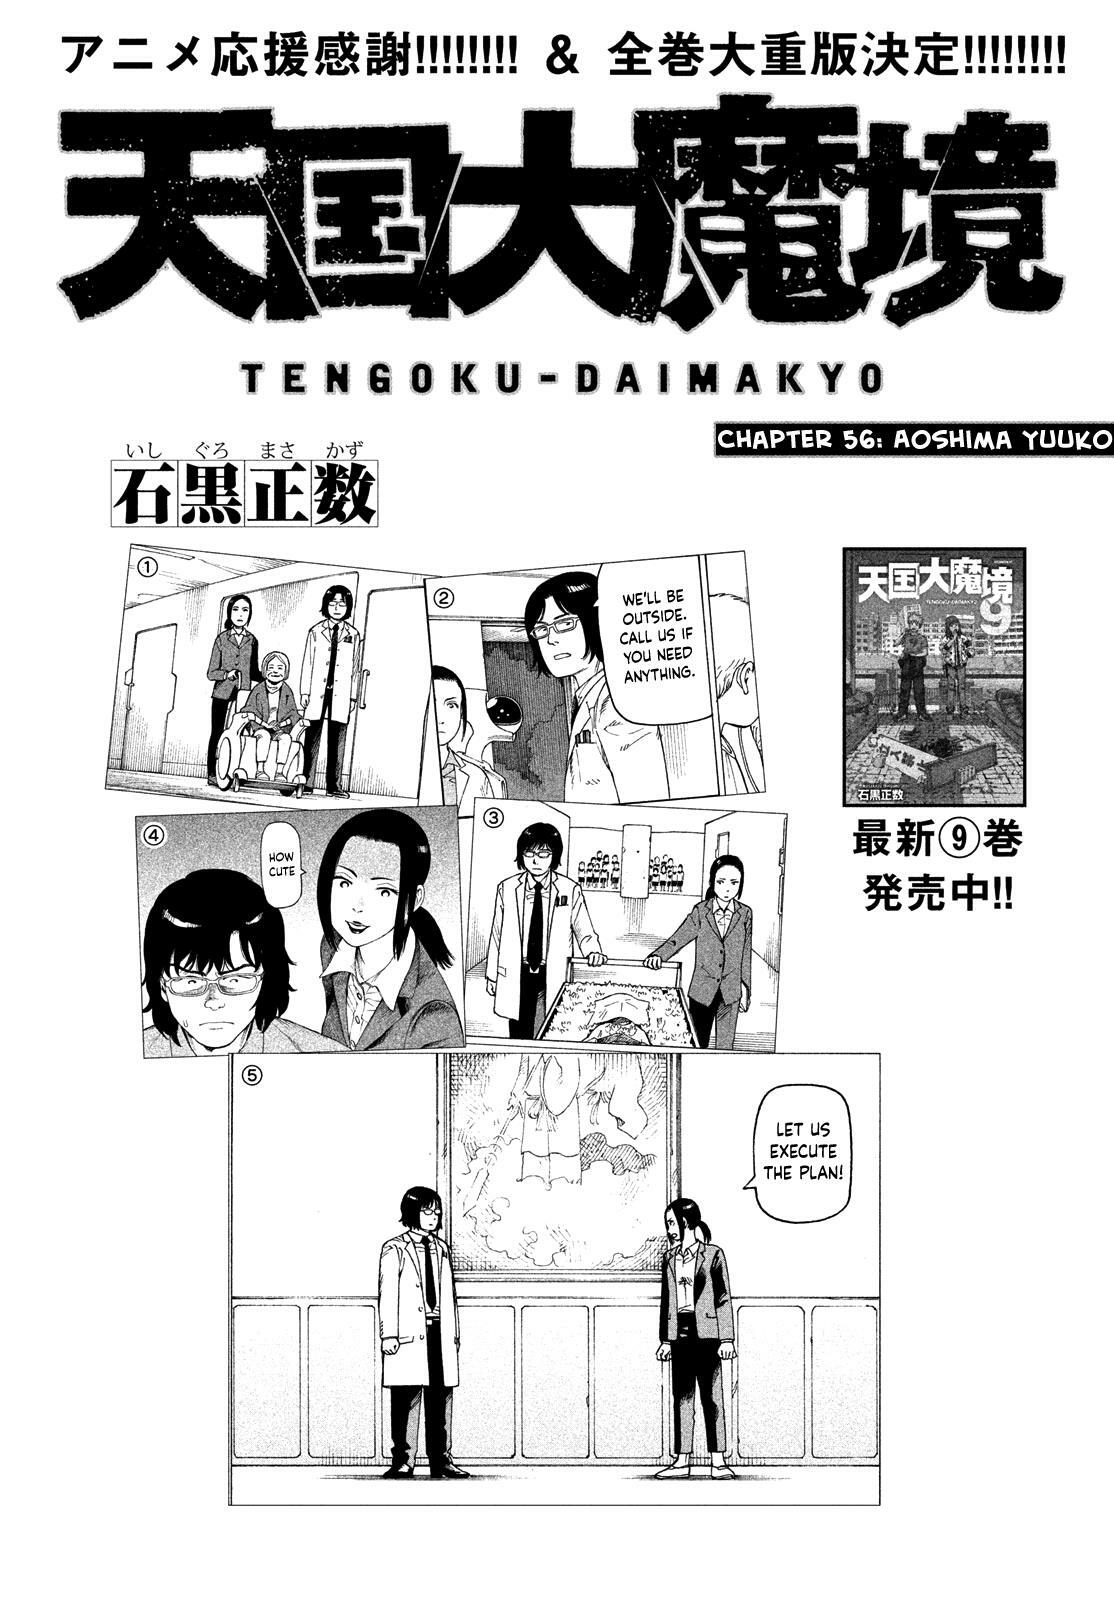 Read Tengoku Daimakyou Vol.1 Chapter 6: Taka - Manganelo